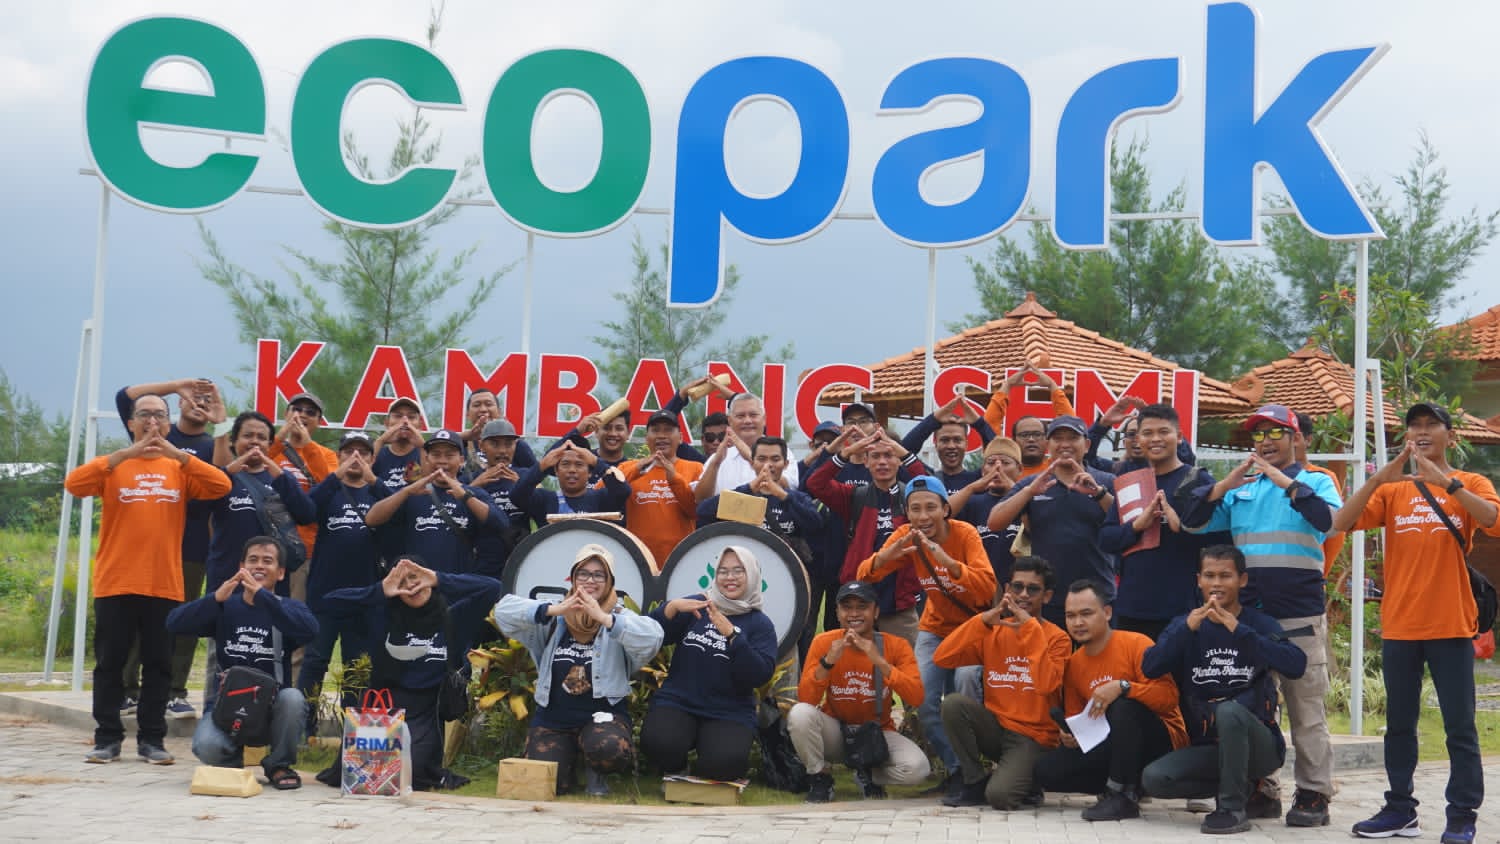 RPS Tuban dan SIG Ajak 30 Netizen Bikin Konten Kreatif di Ecopark Kambang Semi